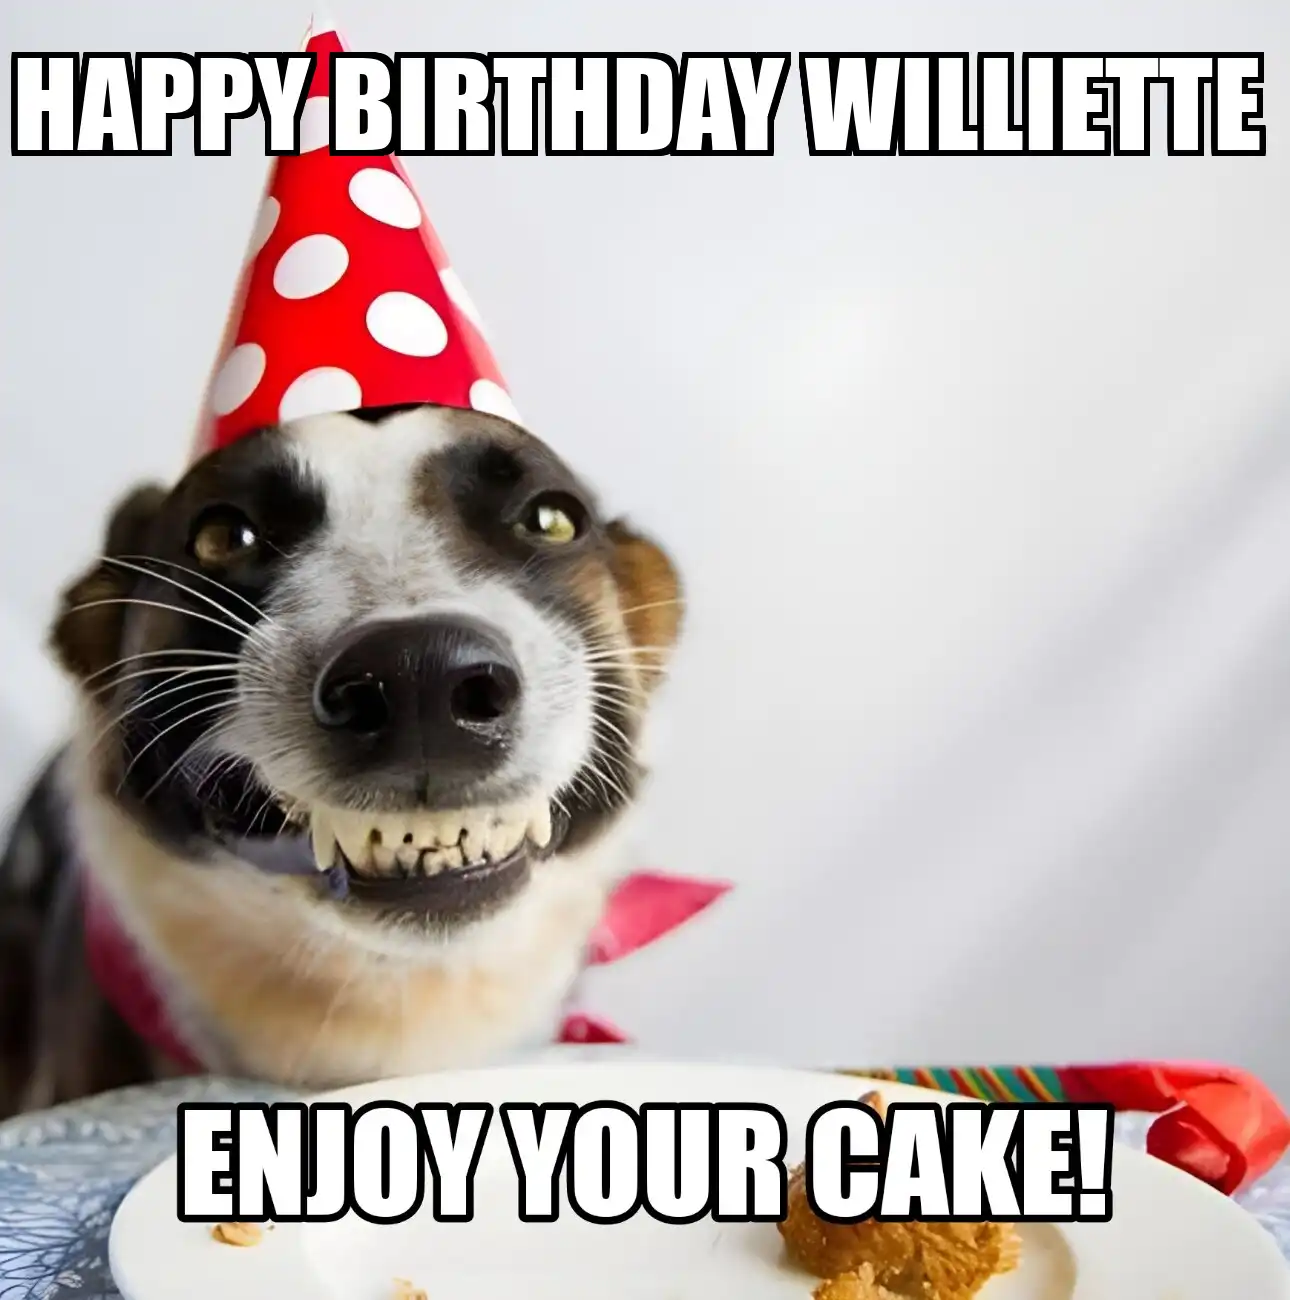 Happy Birthday Williette Enjoy Your Cake Dog Meme